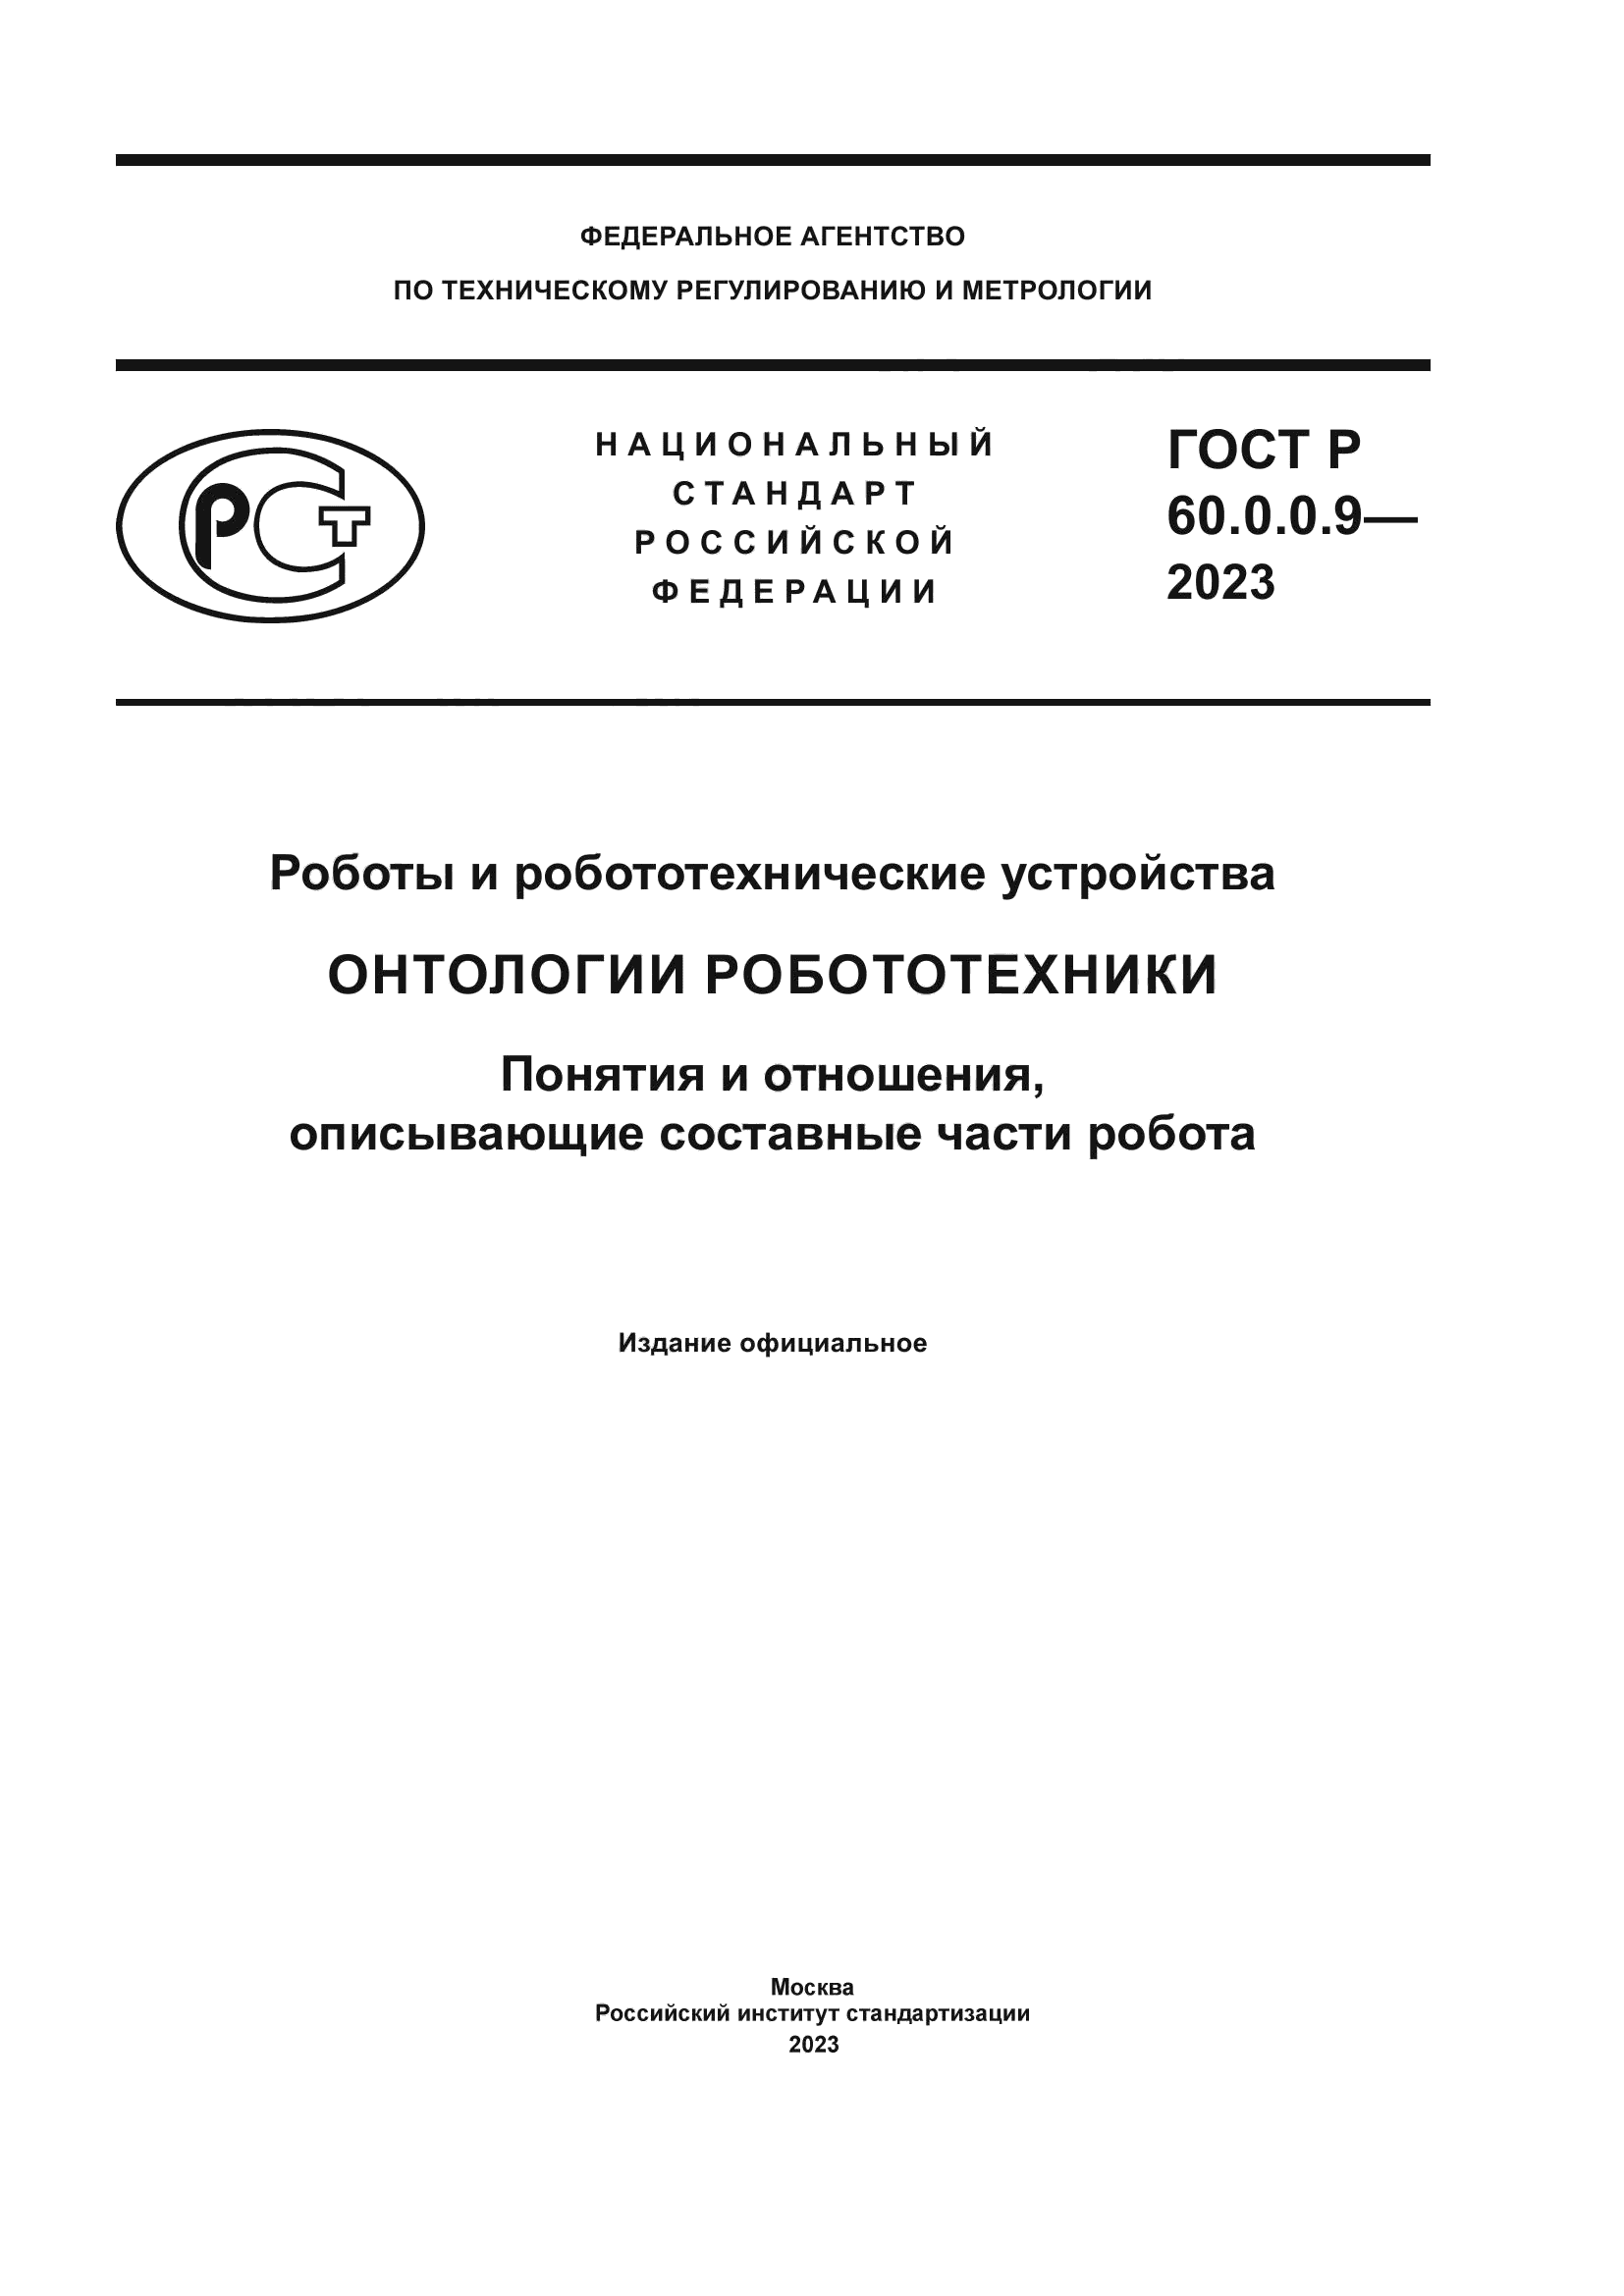 ГОСТ Р 60.0.0.9-2023